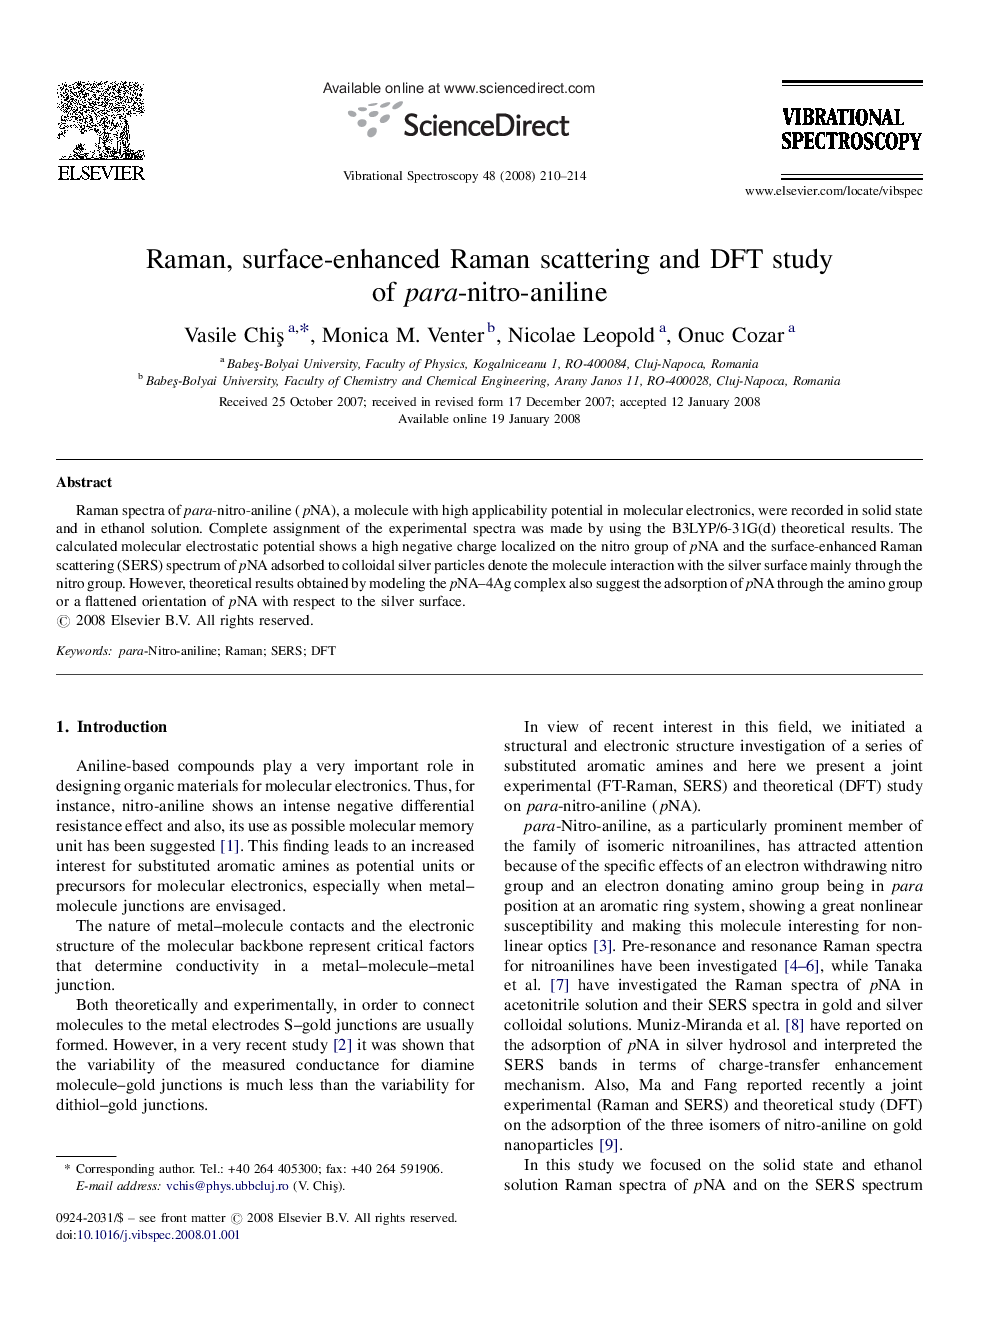 Raman, surface-enhanced Raman scattering and DFT study of para-nitro-aniline